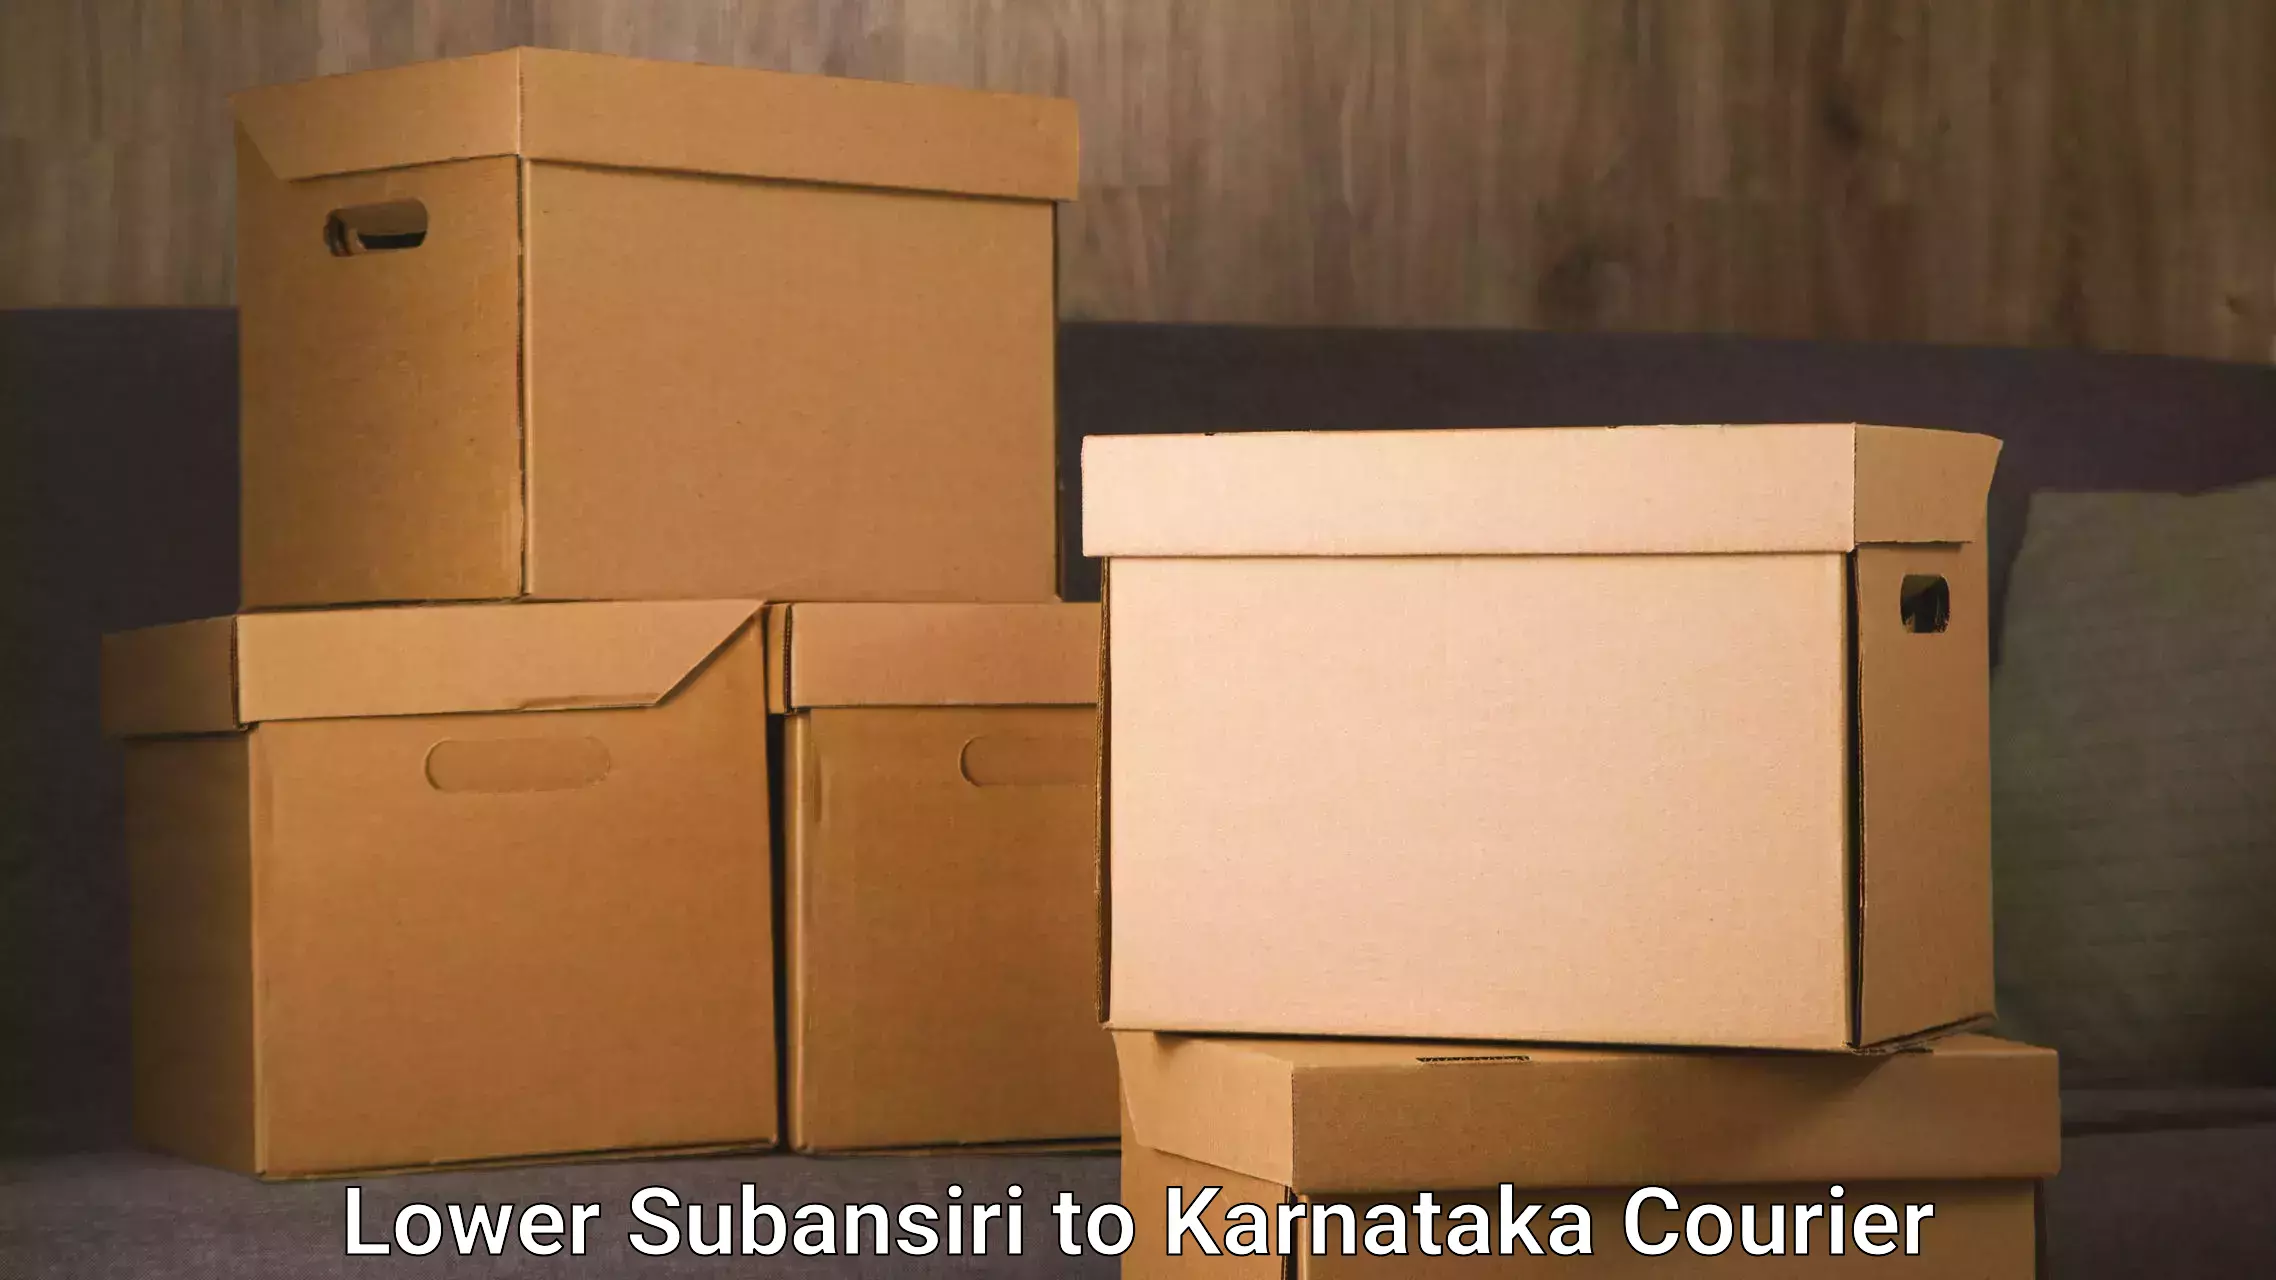 Courier service innovation Lower Subansiri to Karnataka